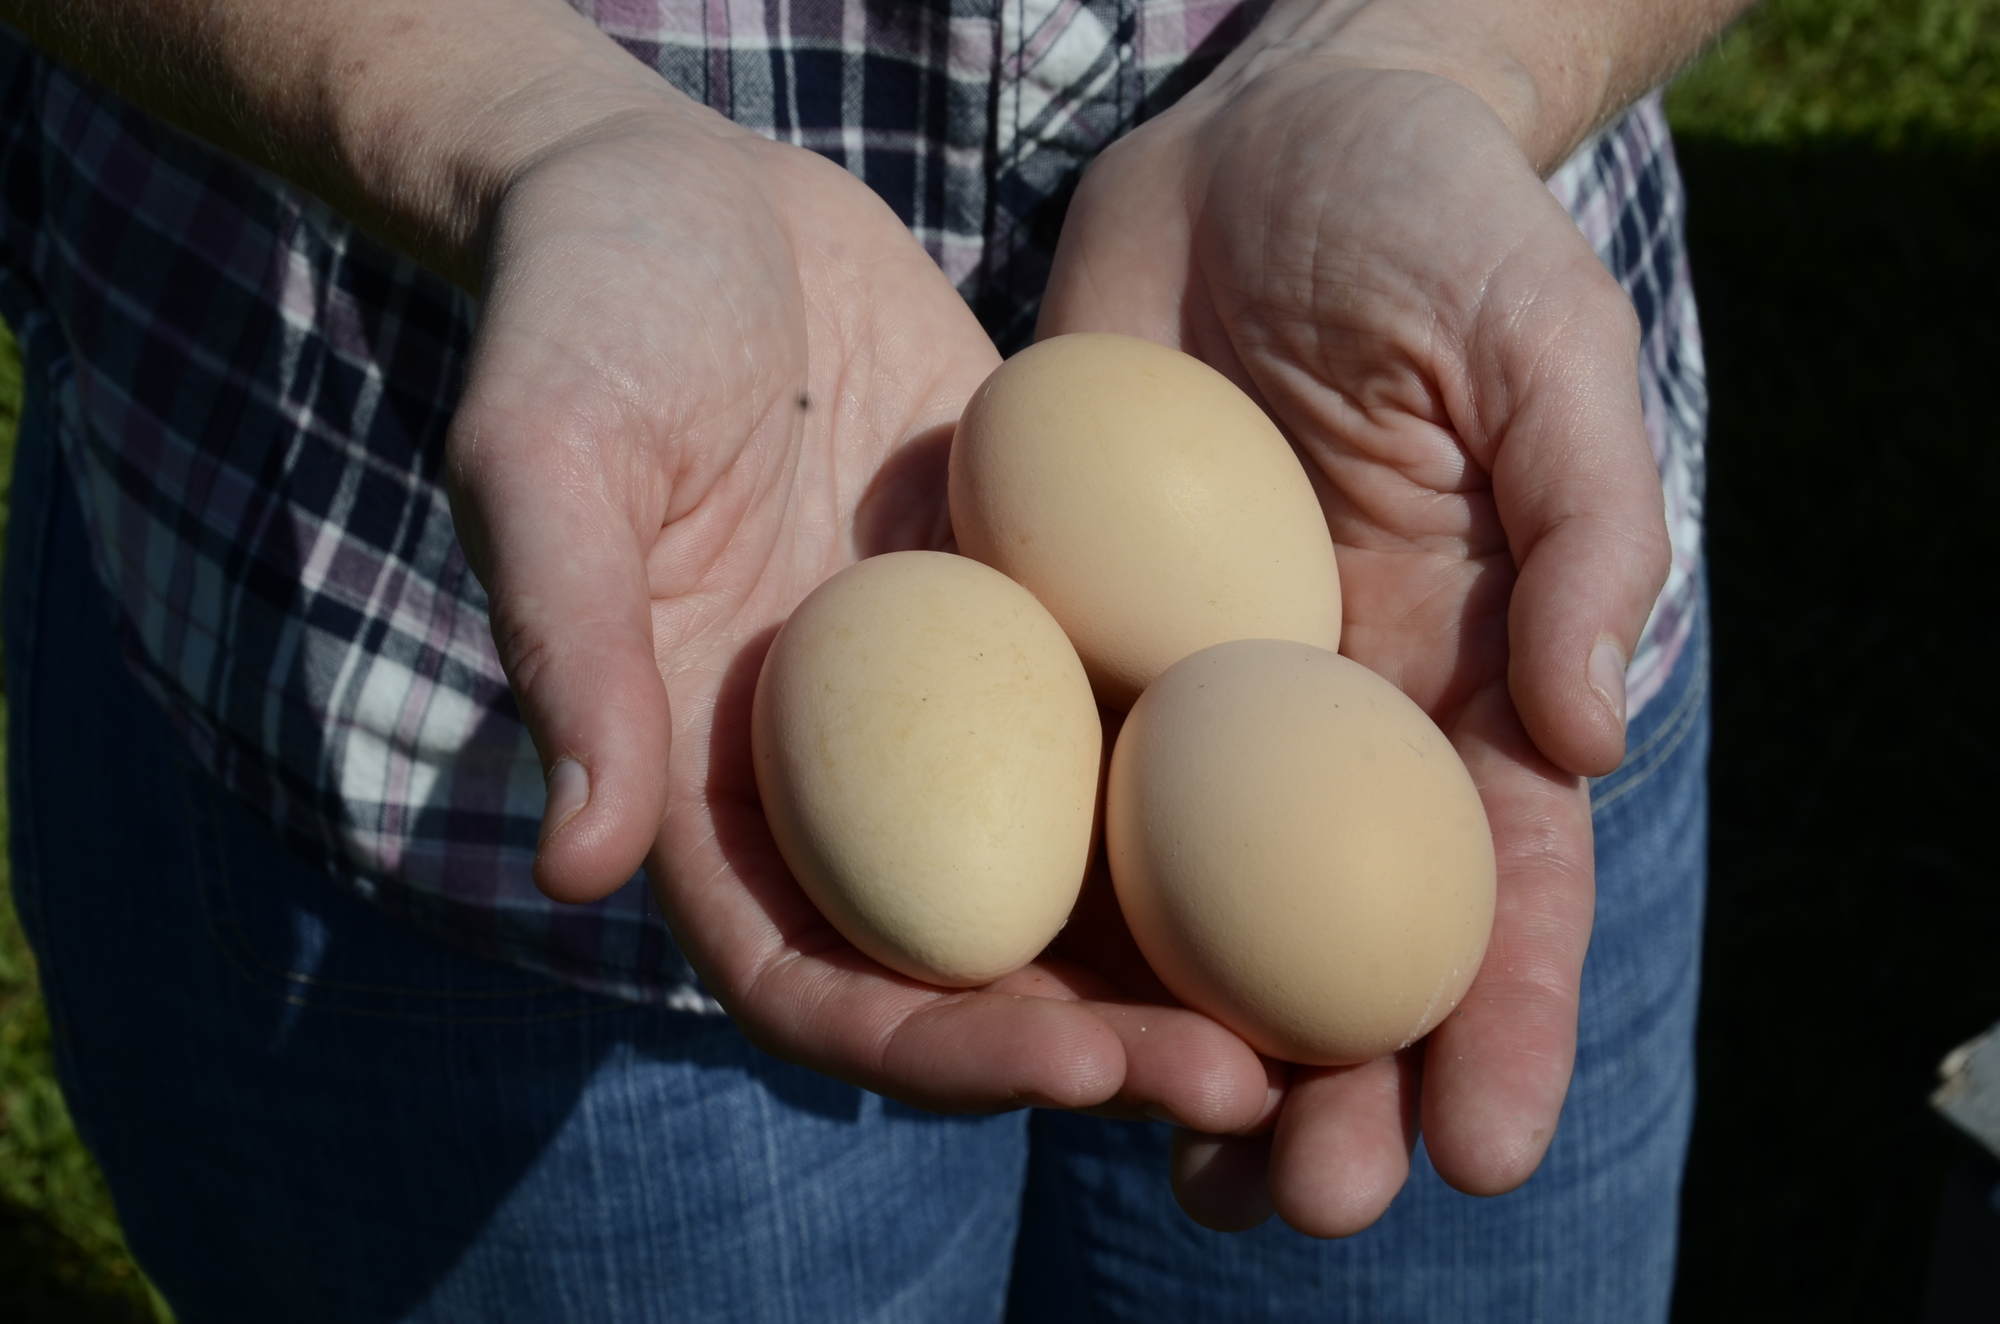 The Gangnagels can get five to six eggs per hen per week.